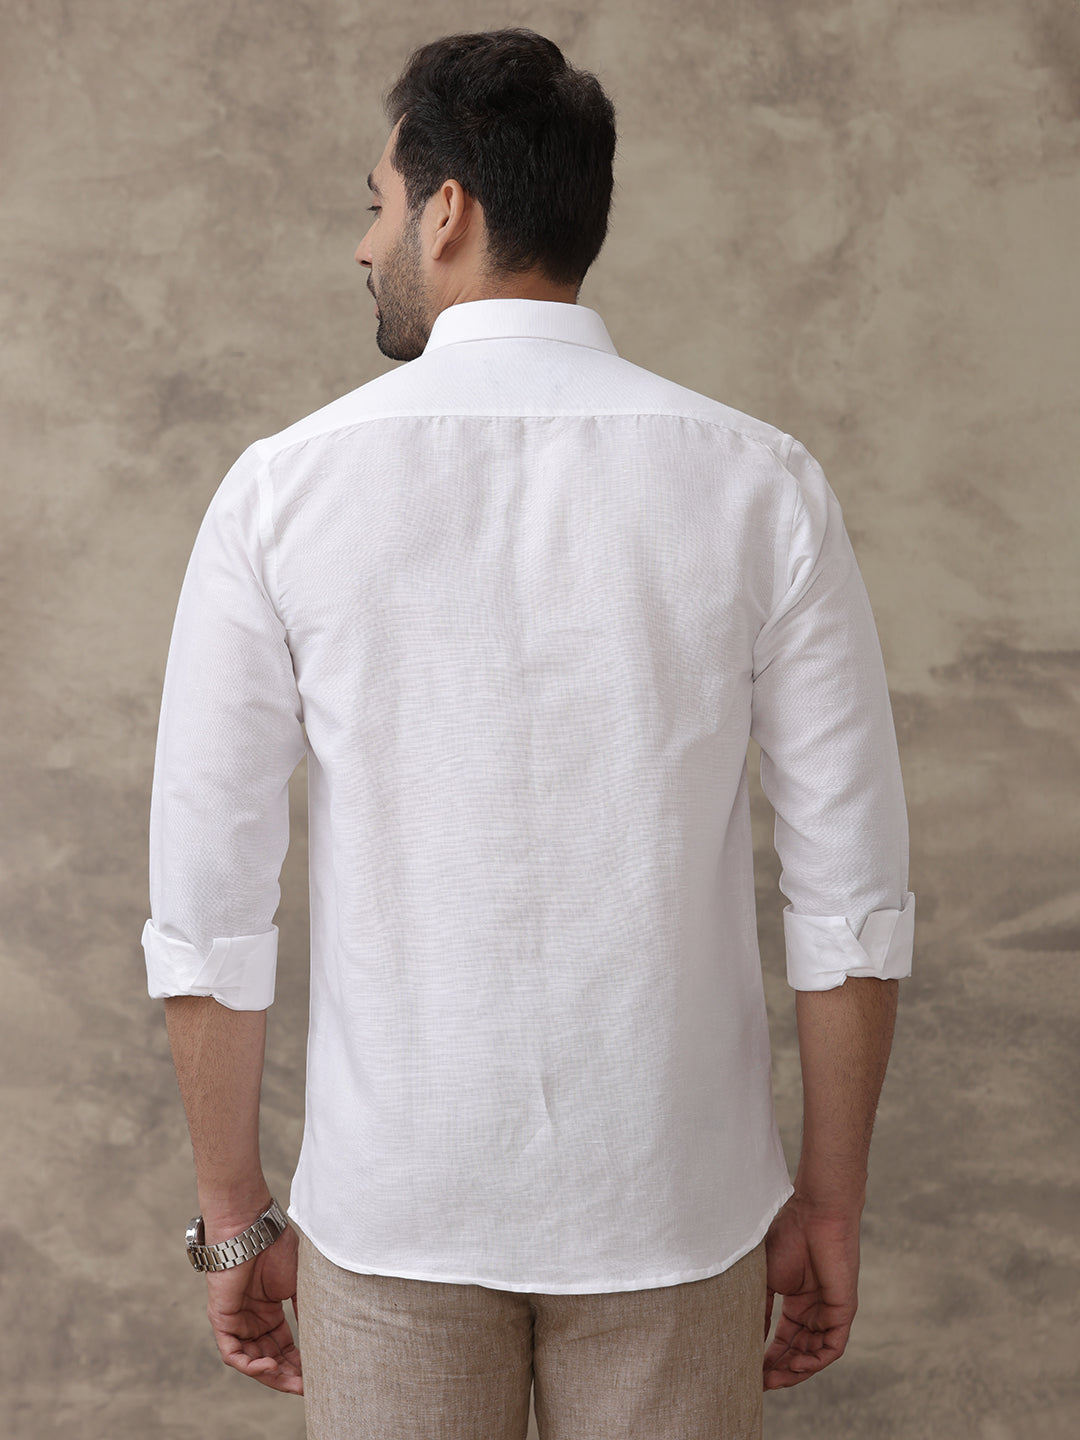 Mens Linen Cotton 7447 White Shirts